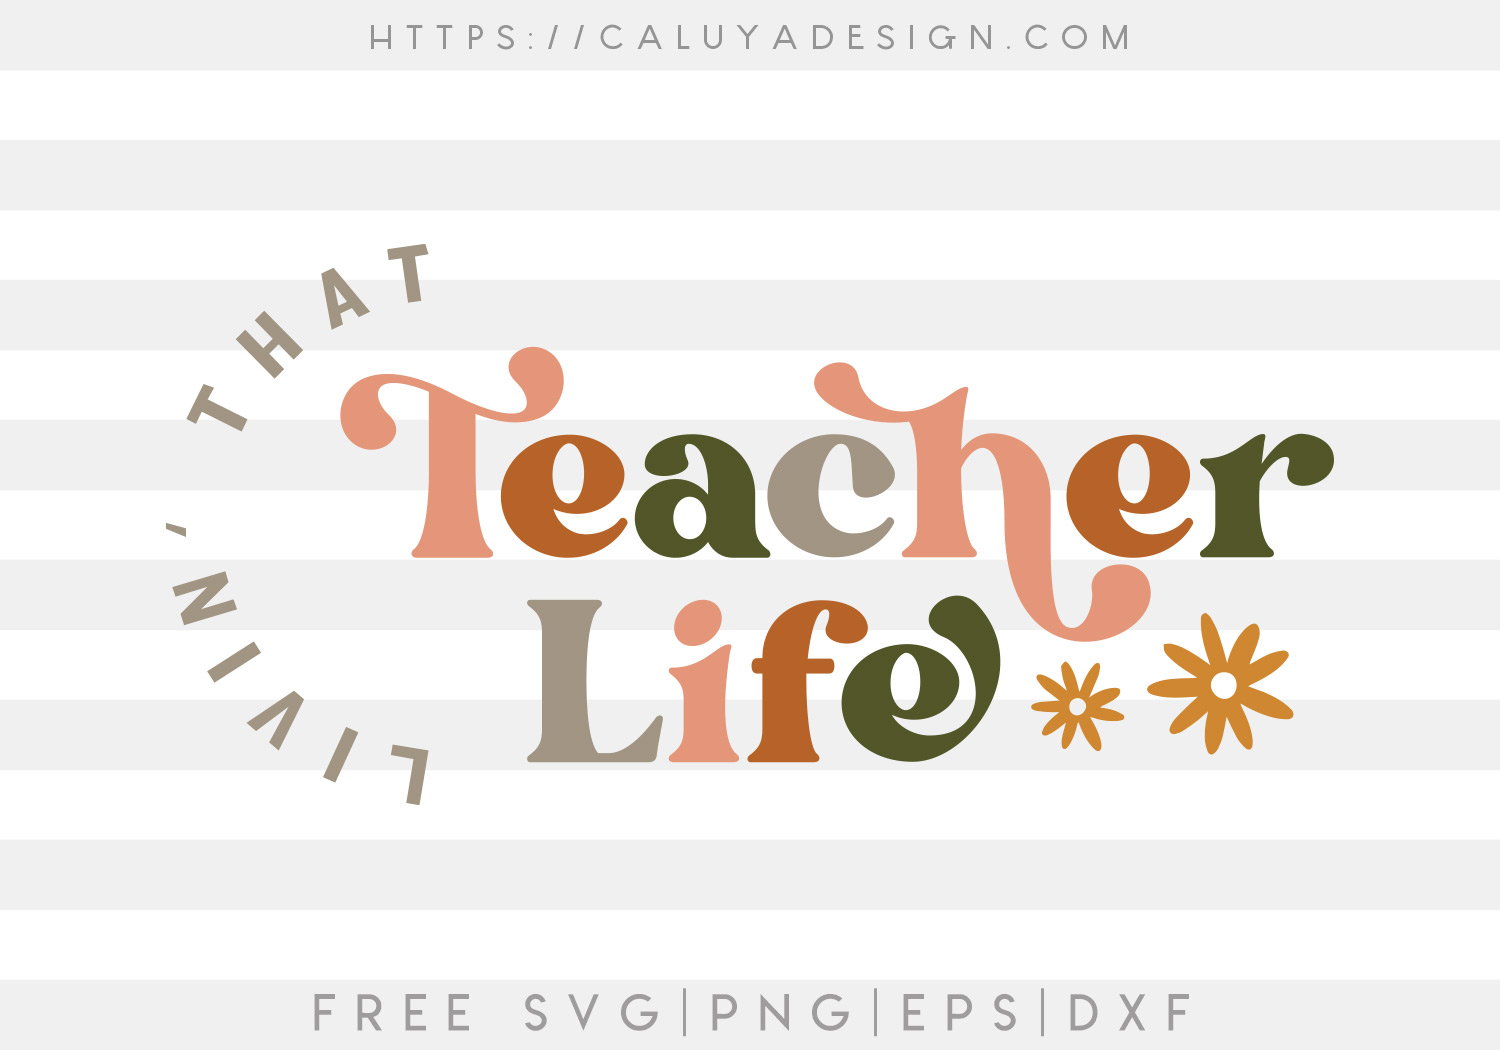 Free Livin' That Teacher SVG